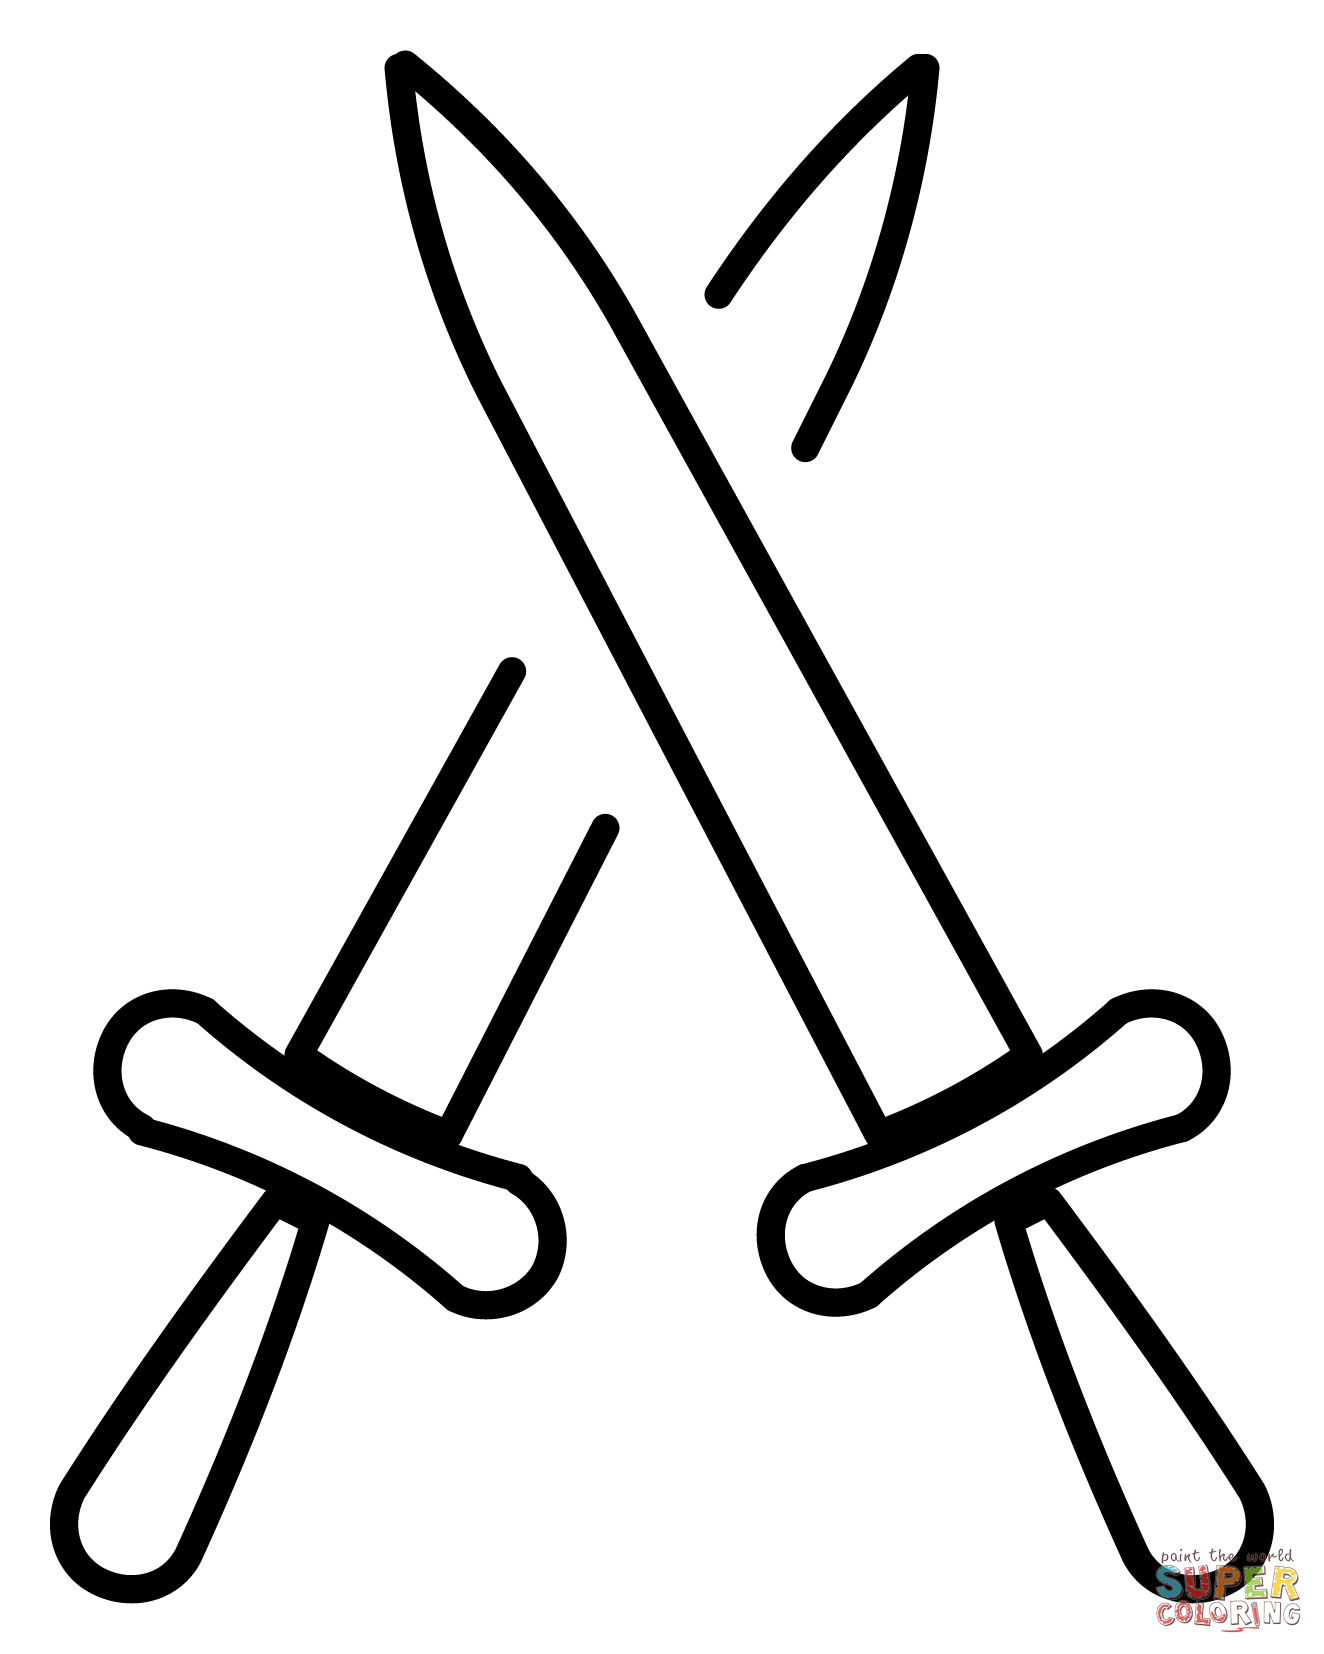 Crossed swords emoji coloring page free printable coloring pages